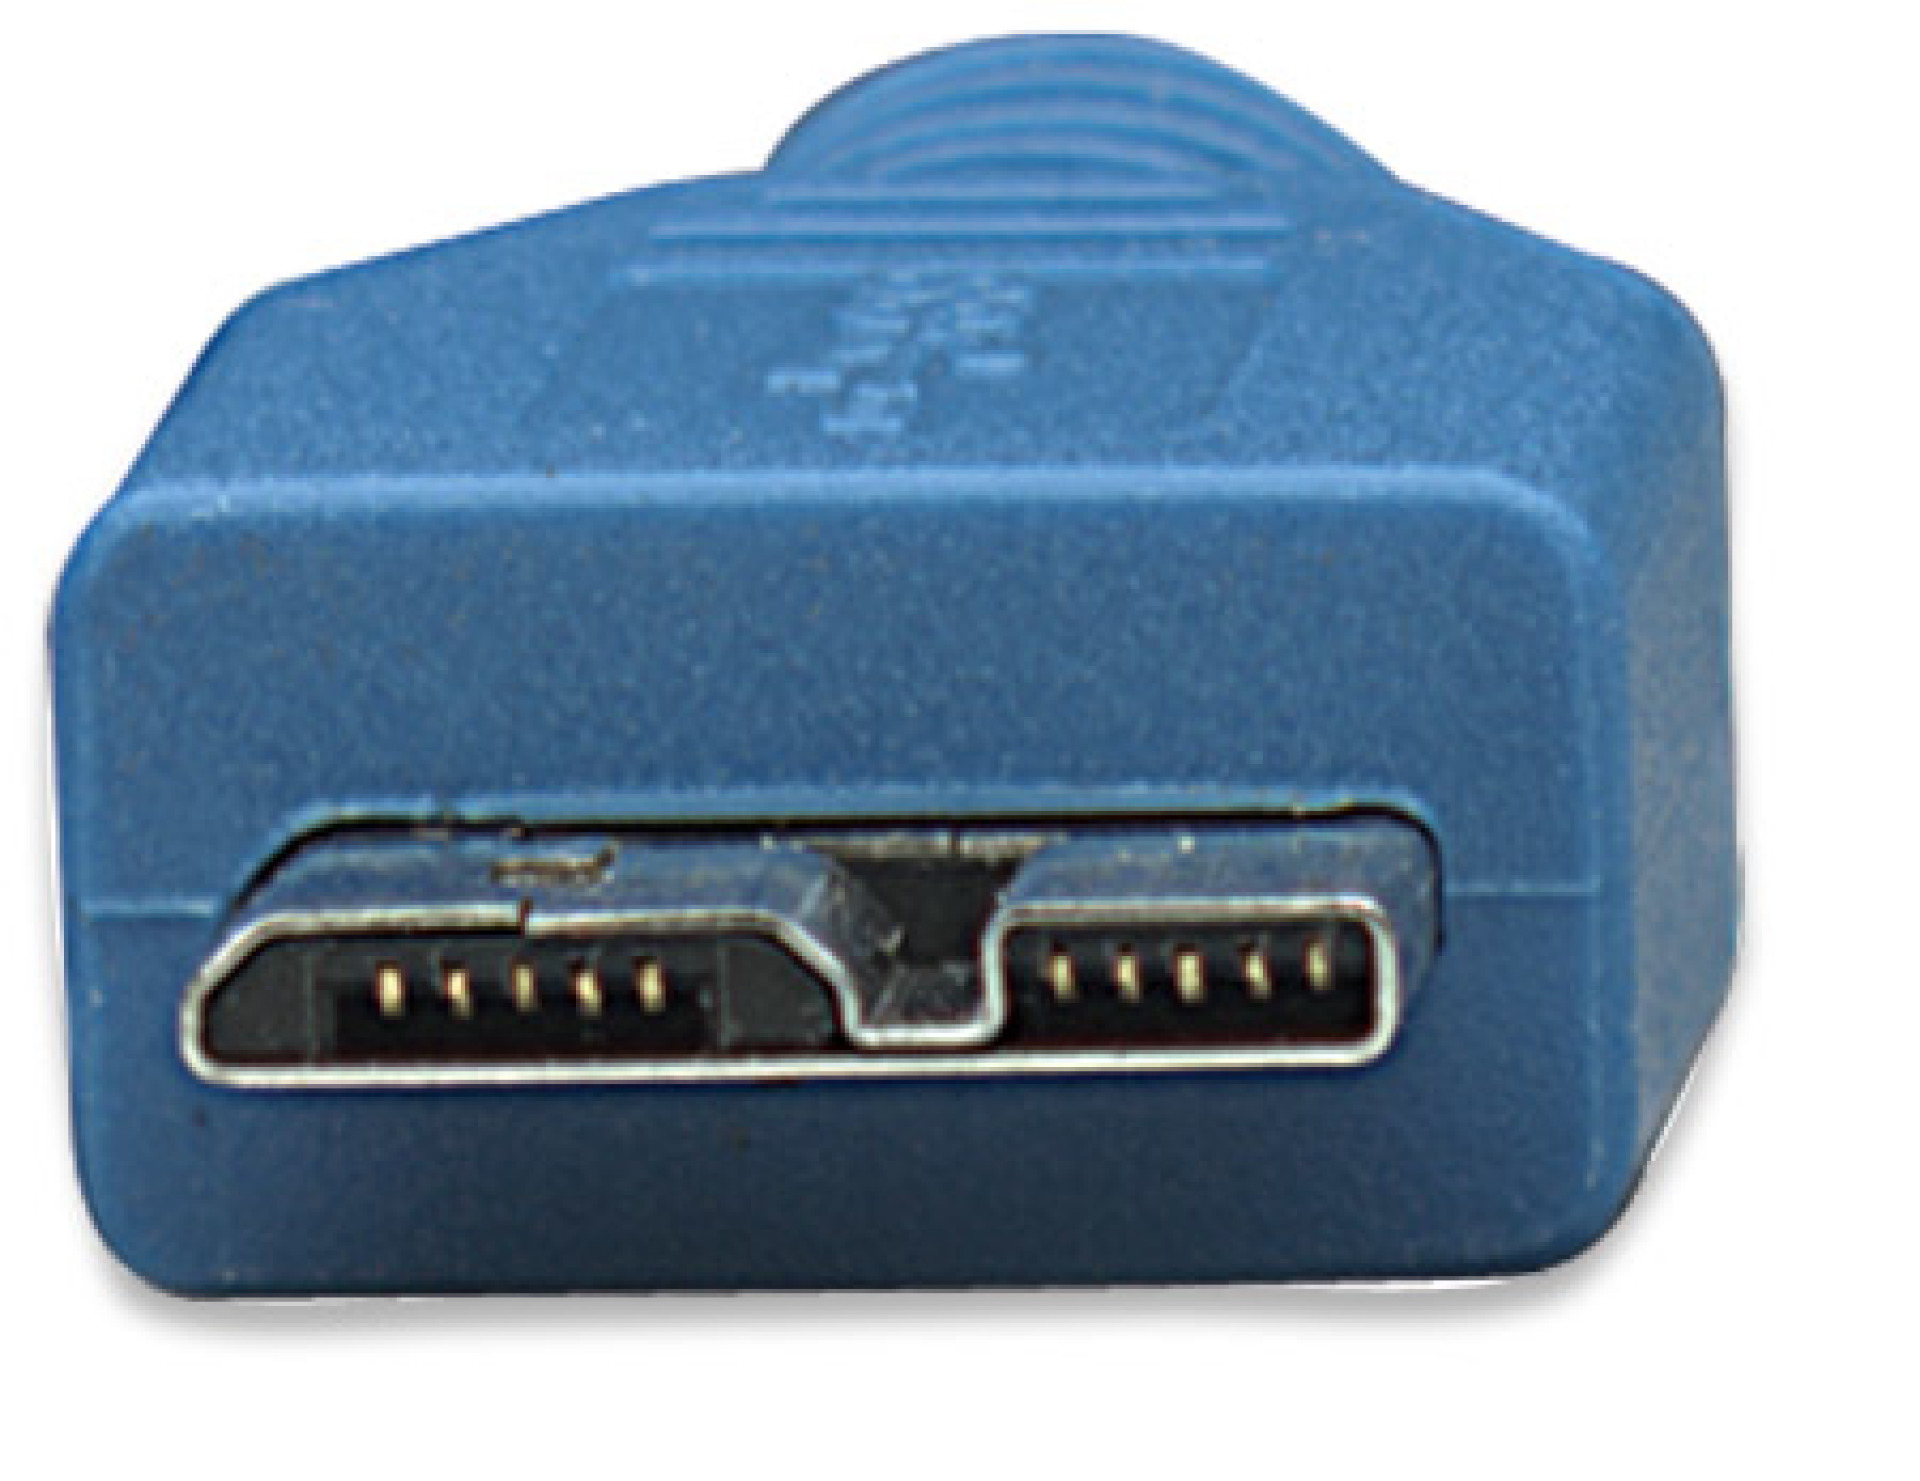 USB3.0 Anschlusskabel Stecker Typ-A - Stecker Micro B, Blau 3 m